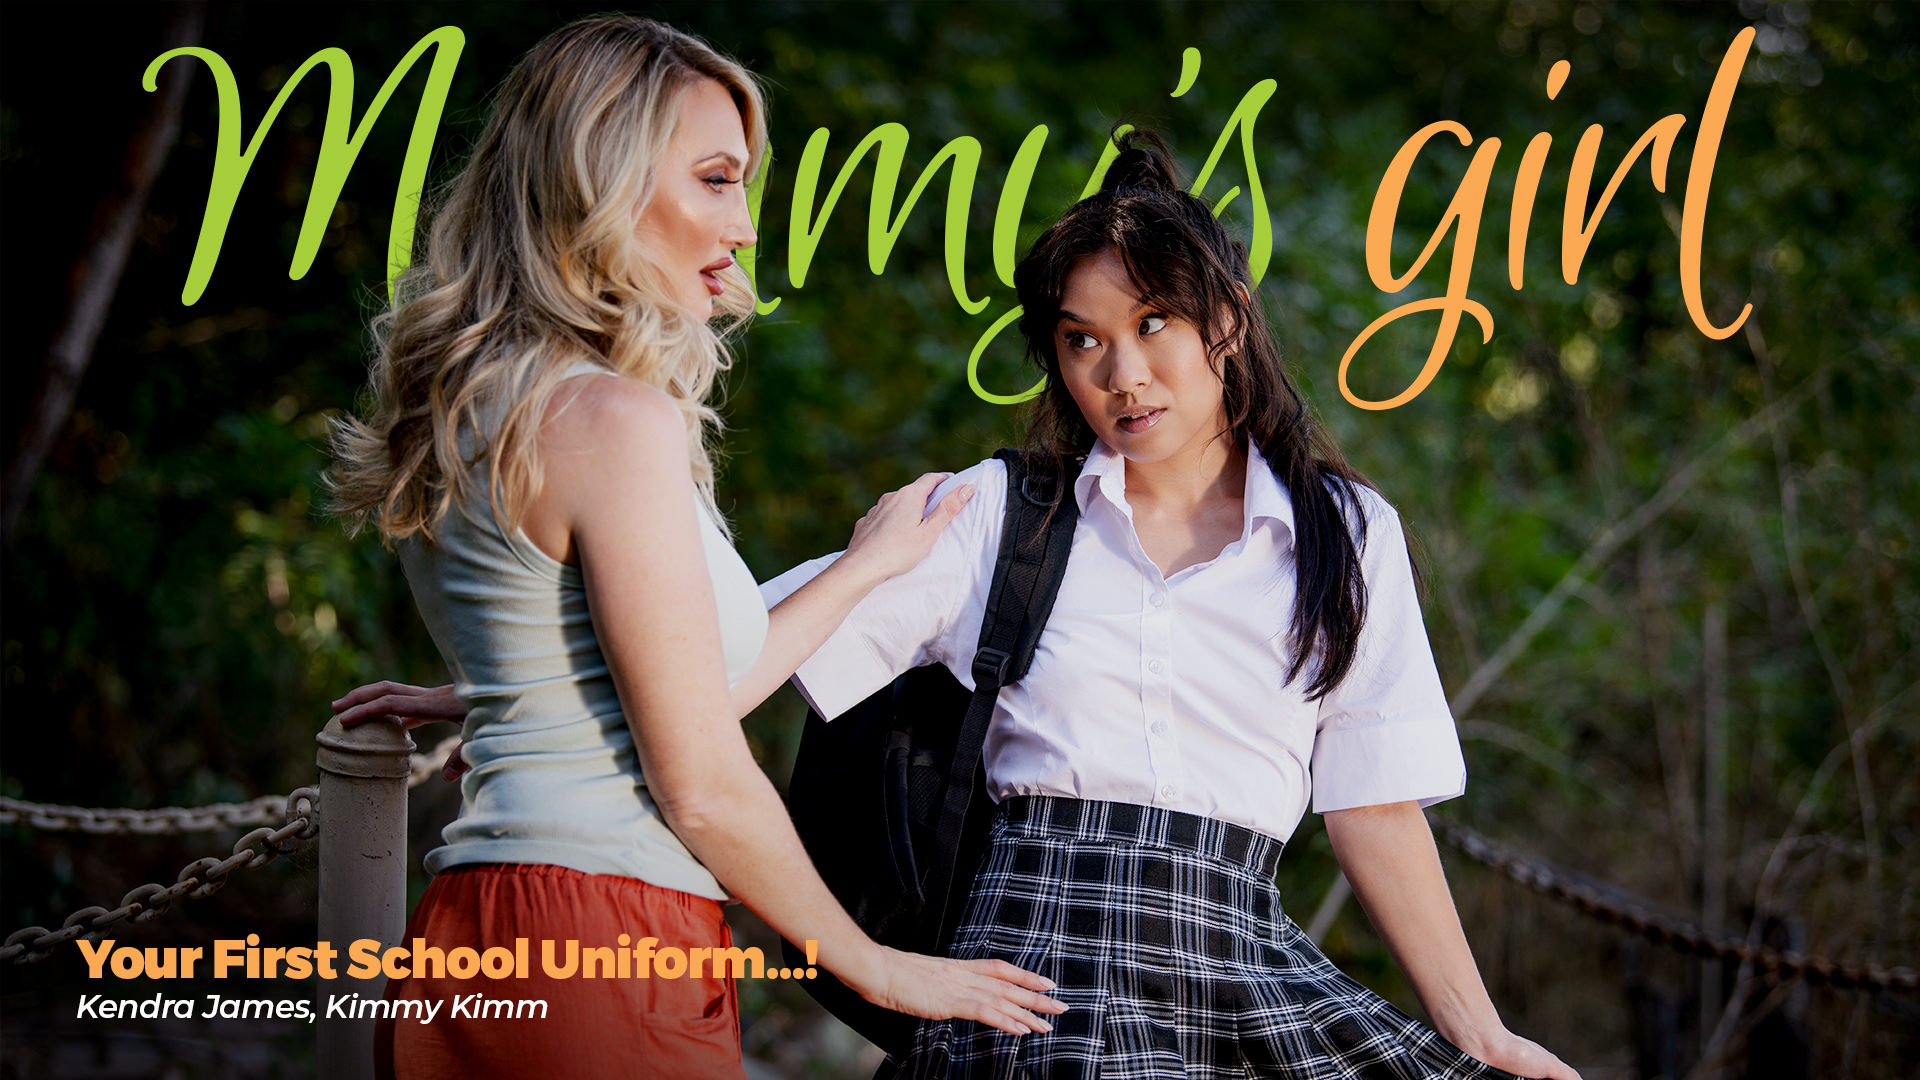 Kendra James, Kimmy Kimm “Your First School Uniform…!” MommysGirl